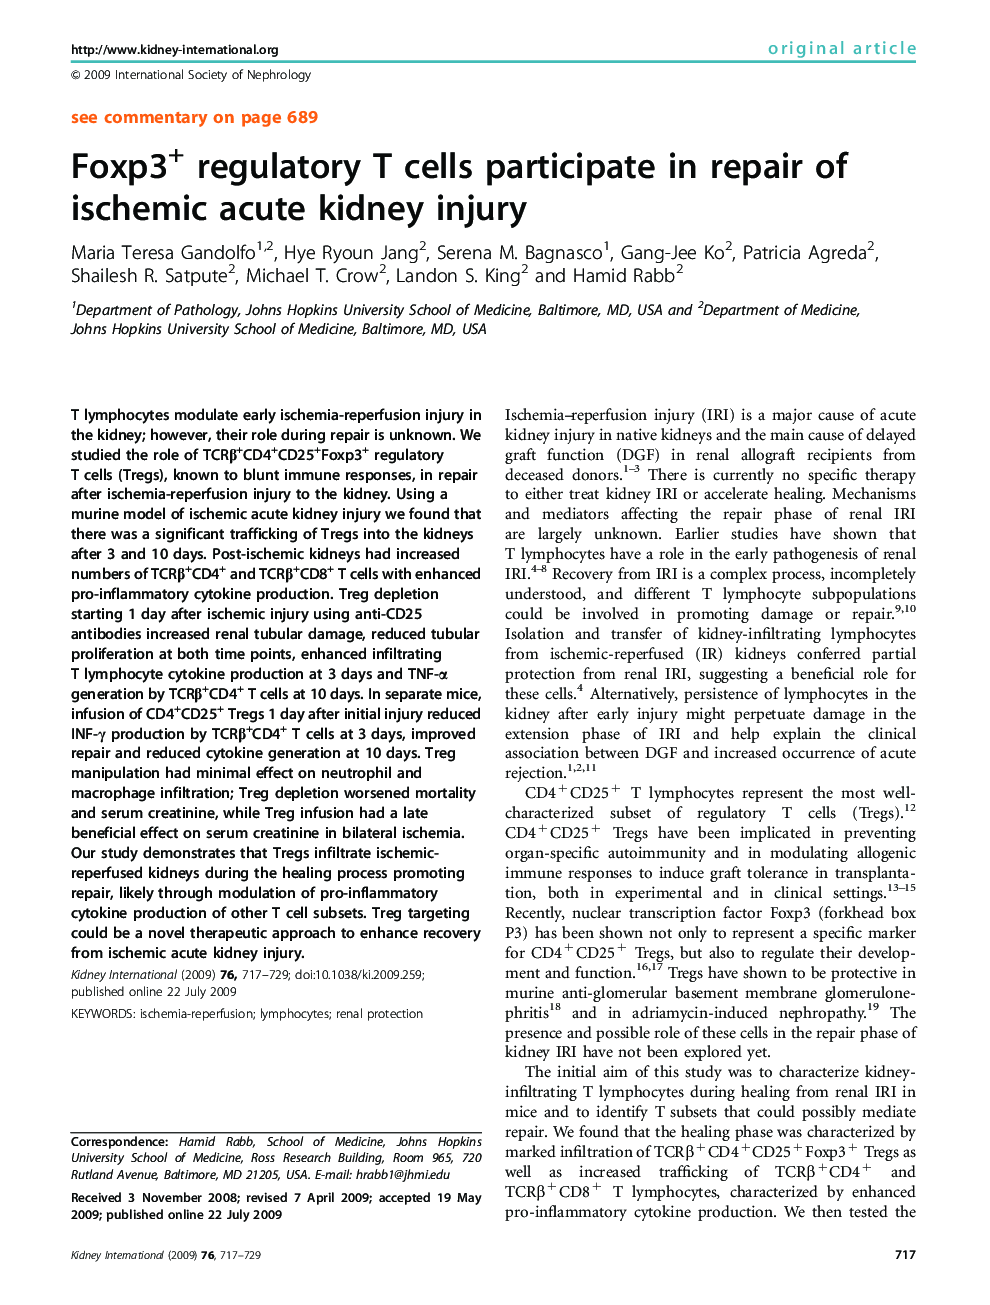 Foxp3+ regulatory T cells participate in repair of ischemic acute kidney injury